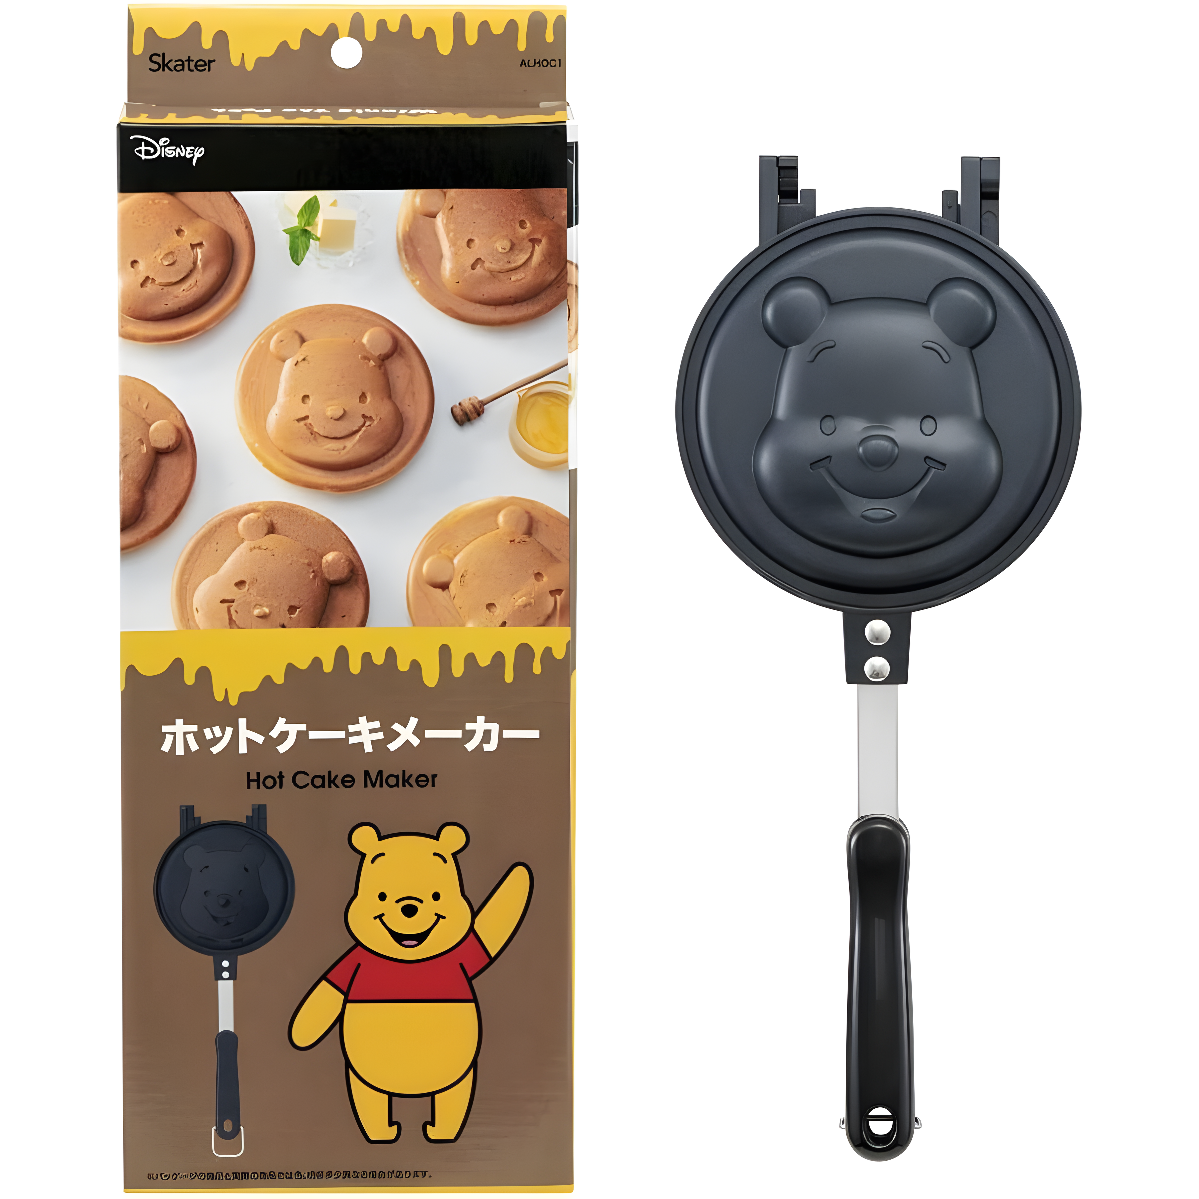 Hot Cake Maker Winnie the Pooh (Japan Edition)